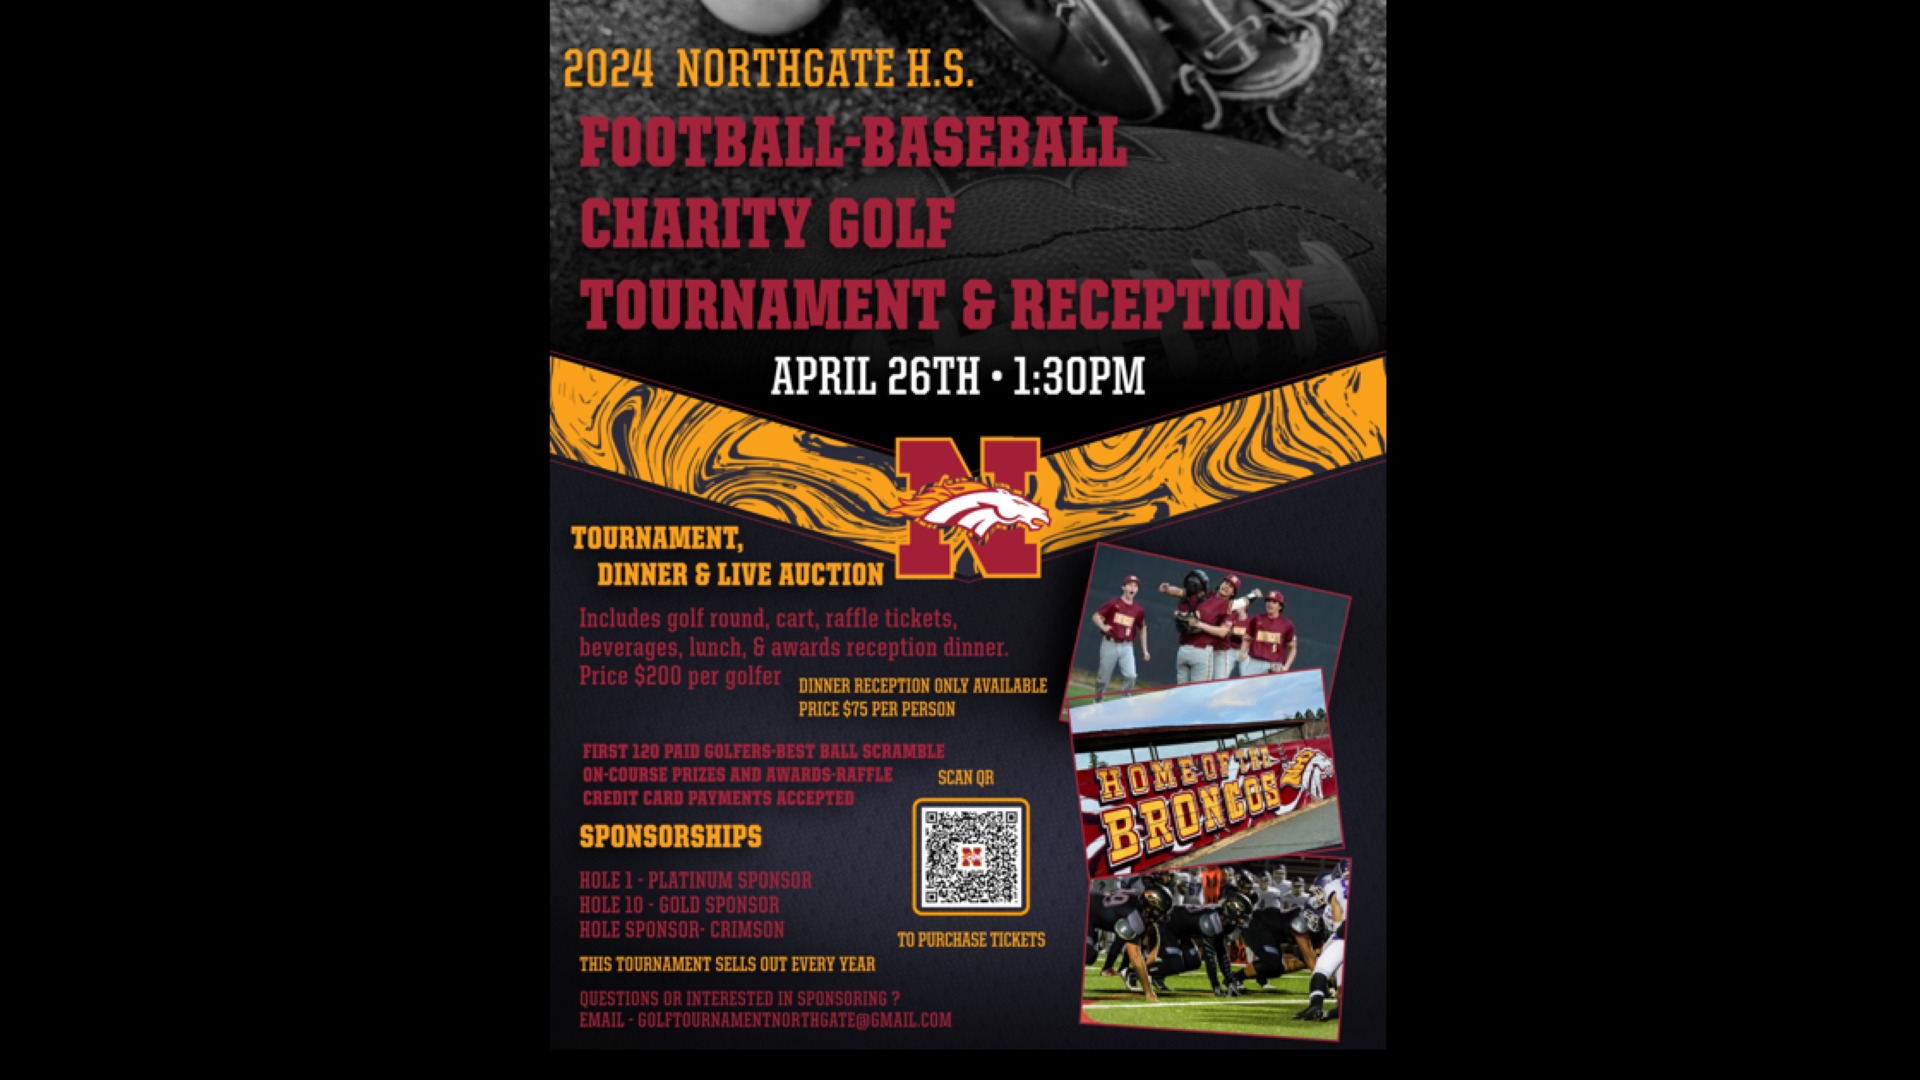 Northgate Slide 0 - 2024 Football-Baseball Charity Golf Tournament